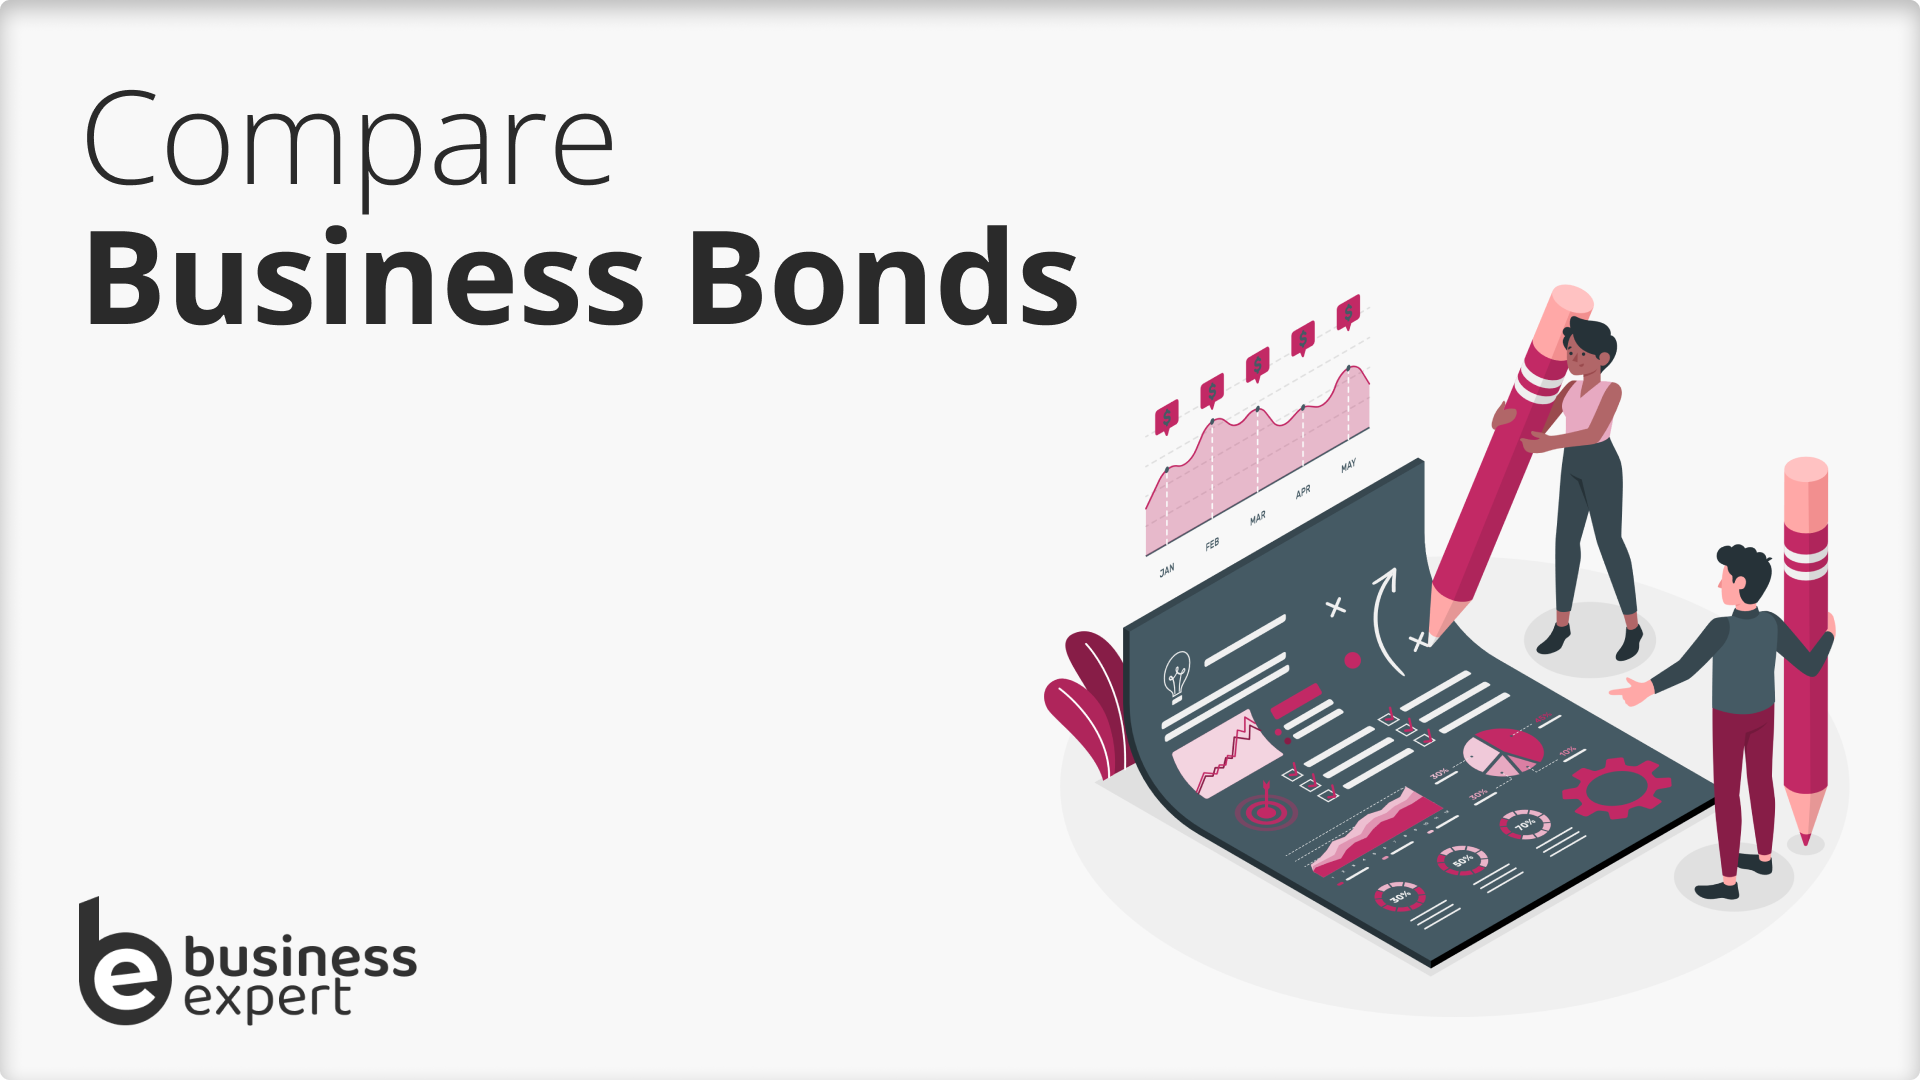 Compare Business Bonds